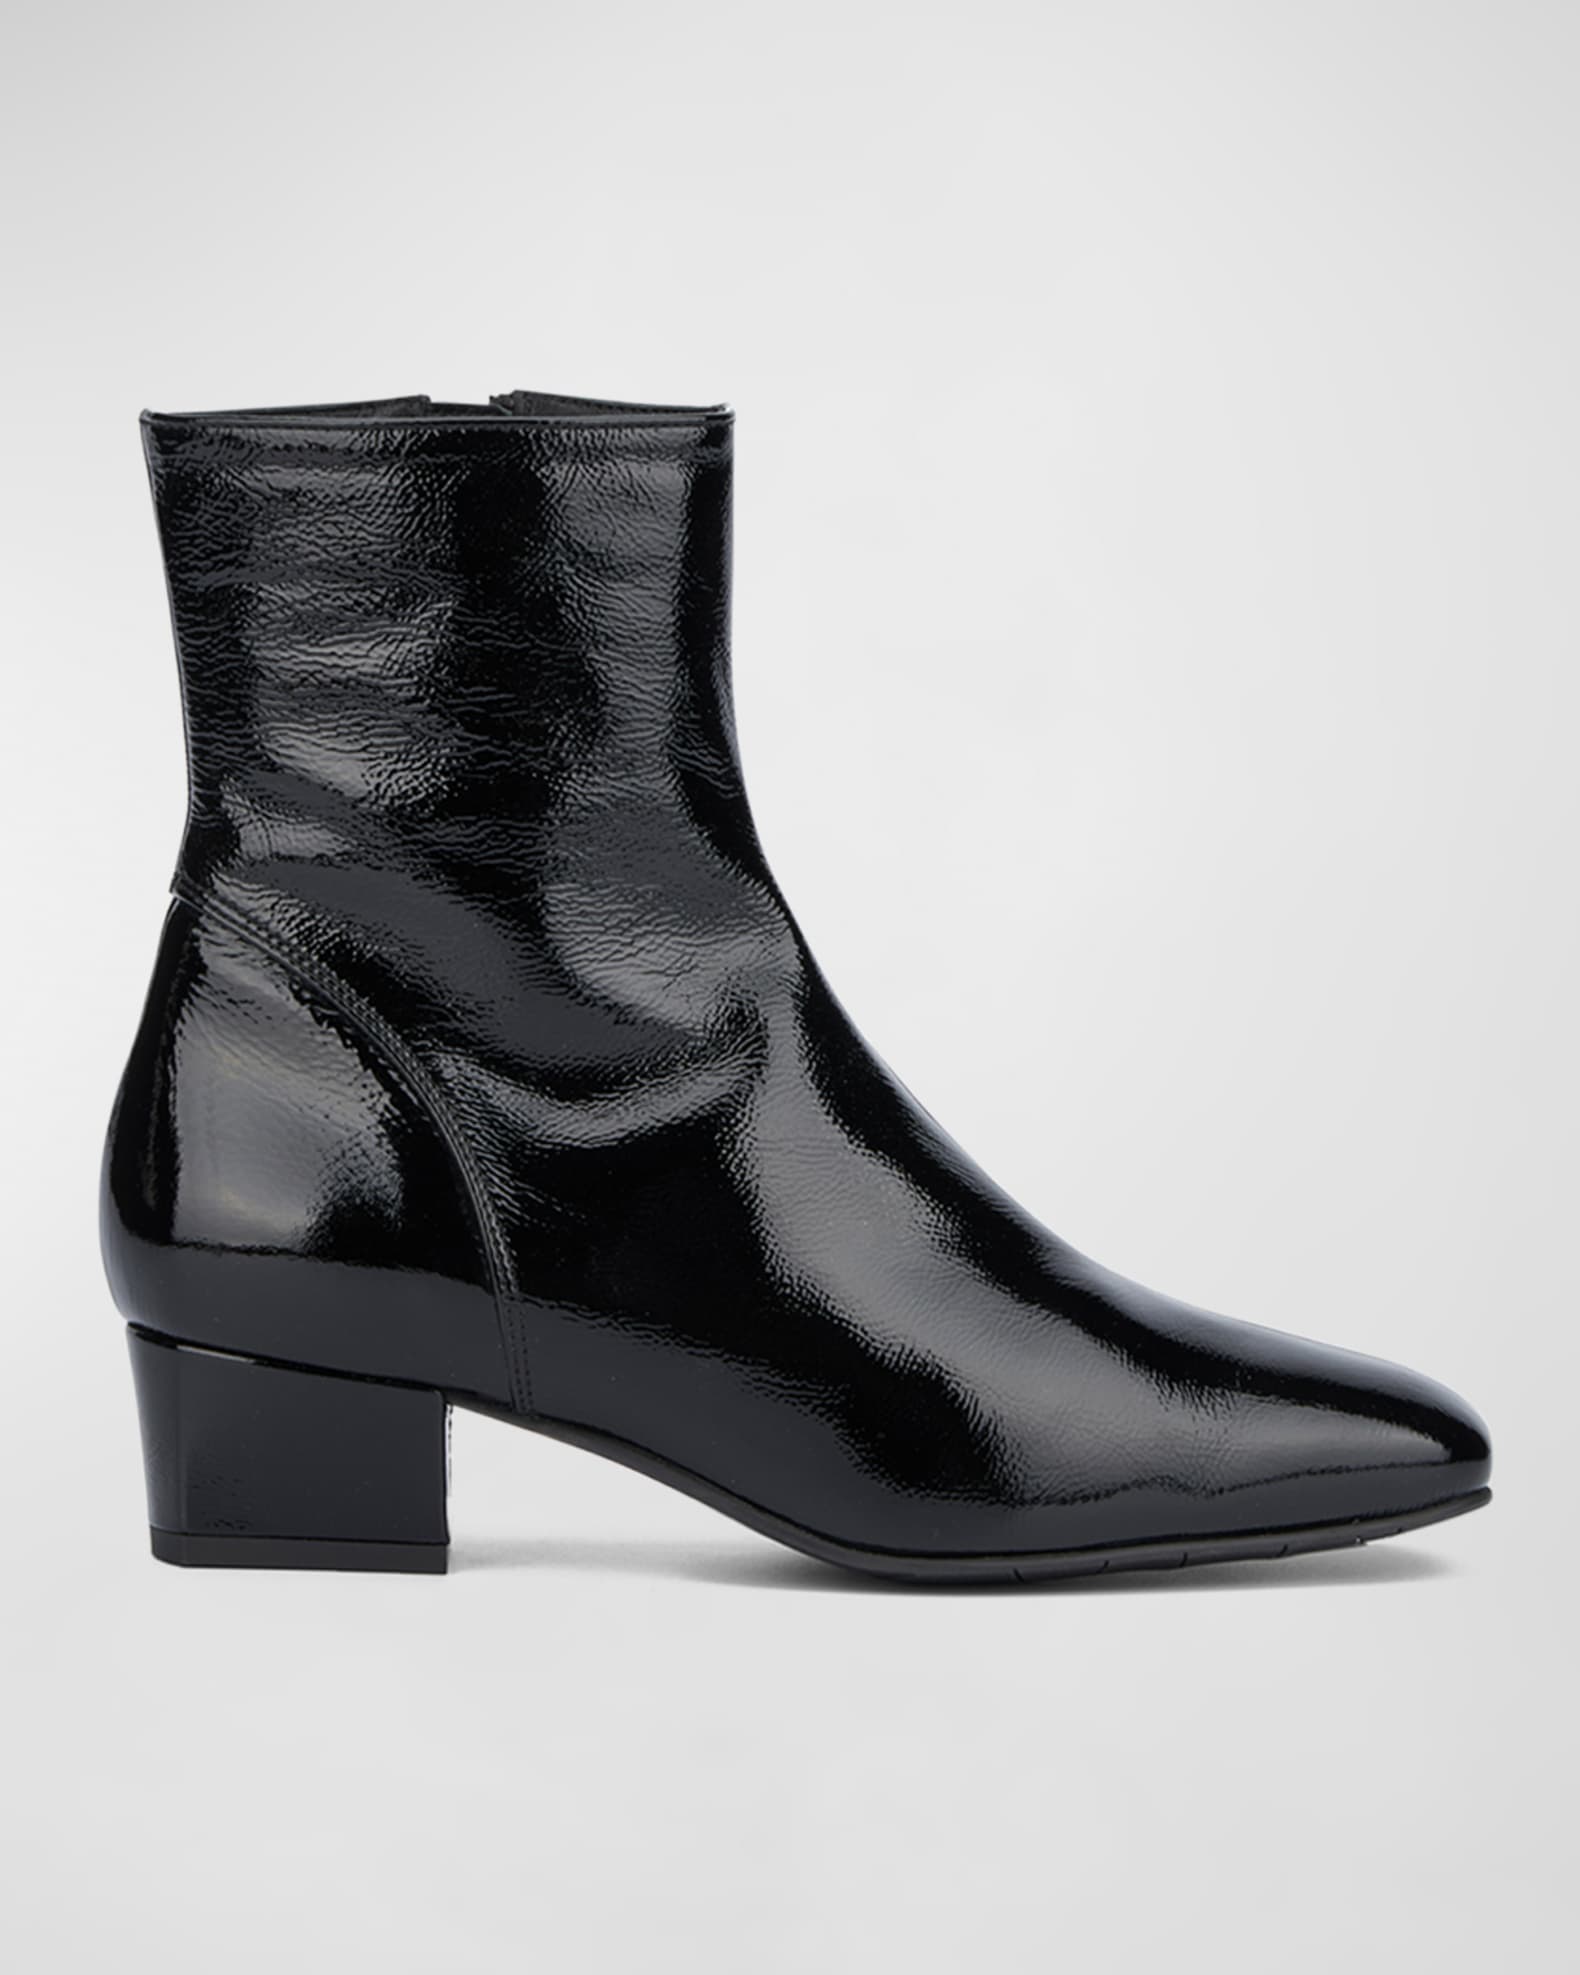 Aquatalia Selini Patent Leather Zip Booties | Neiman Marcus